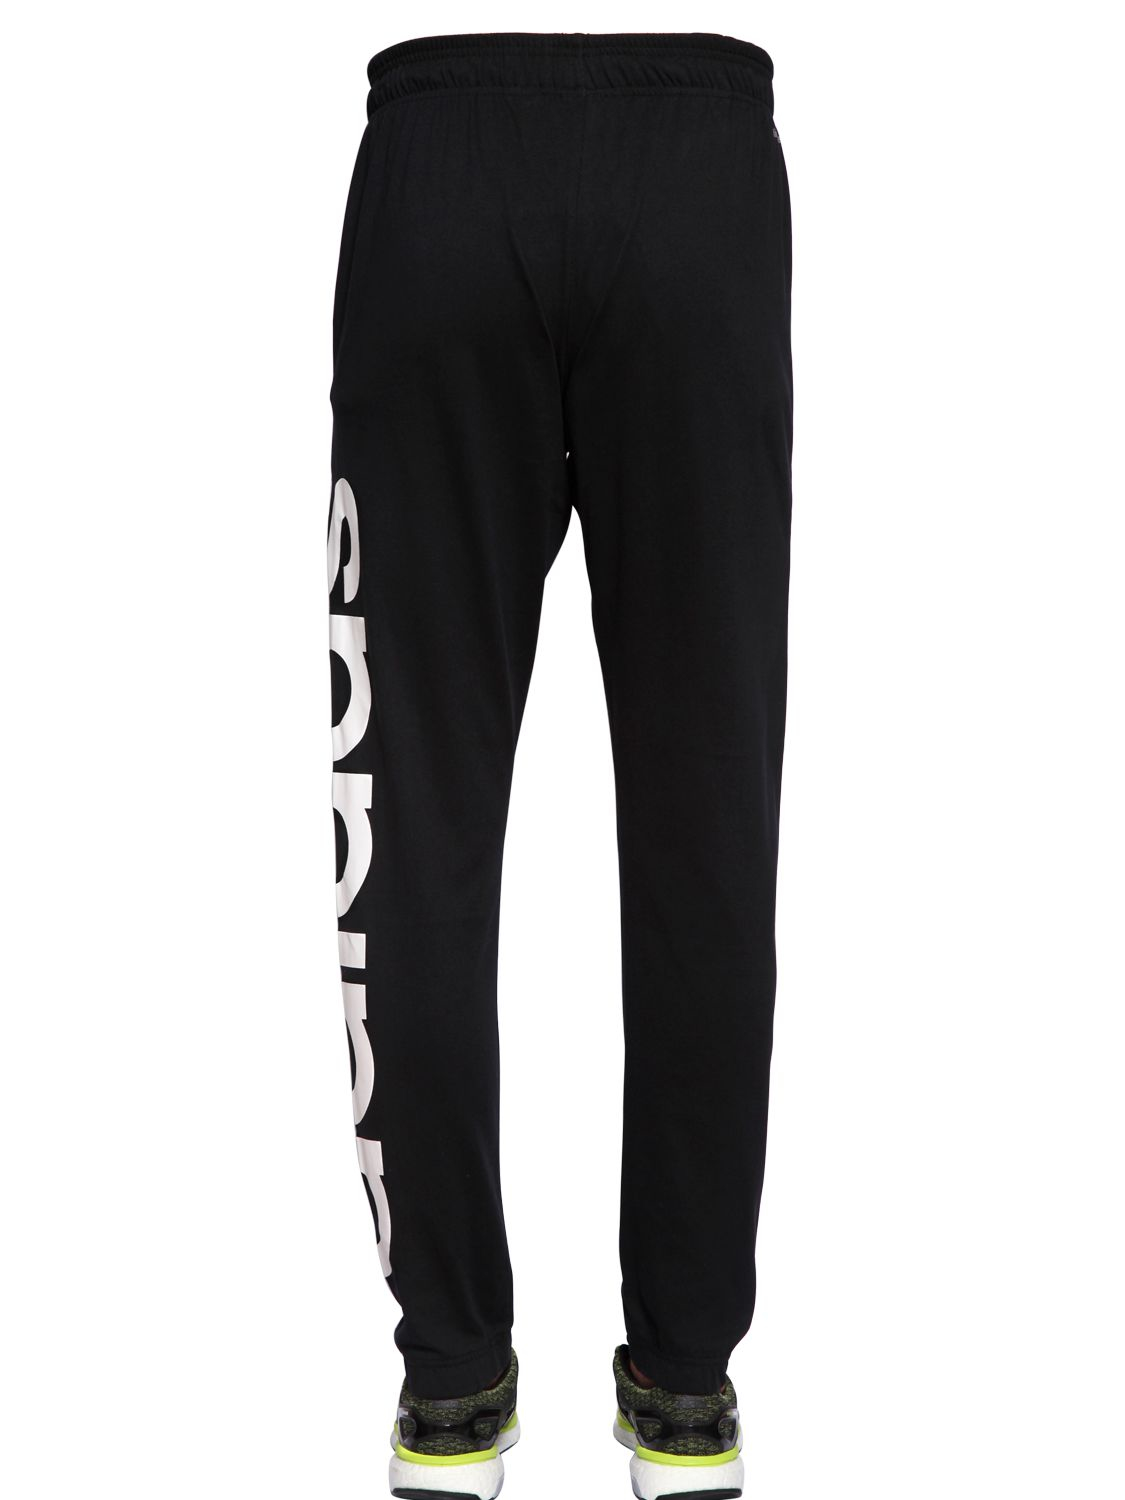 adidas Originals Climalite Cotton Blend Jogging Pants in Black/White ...